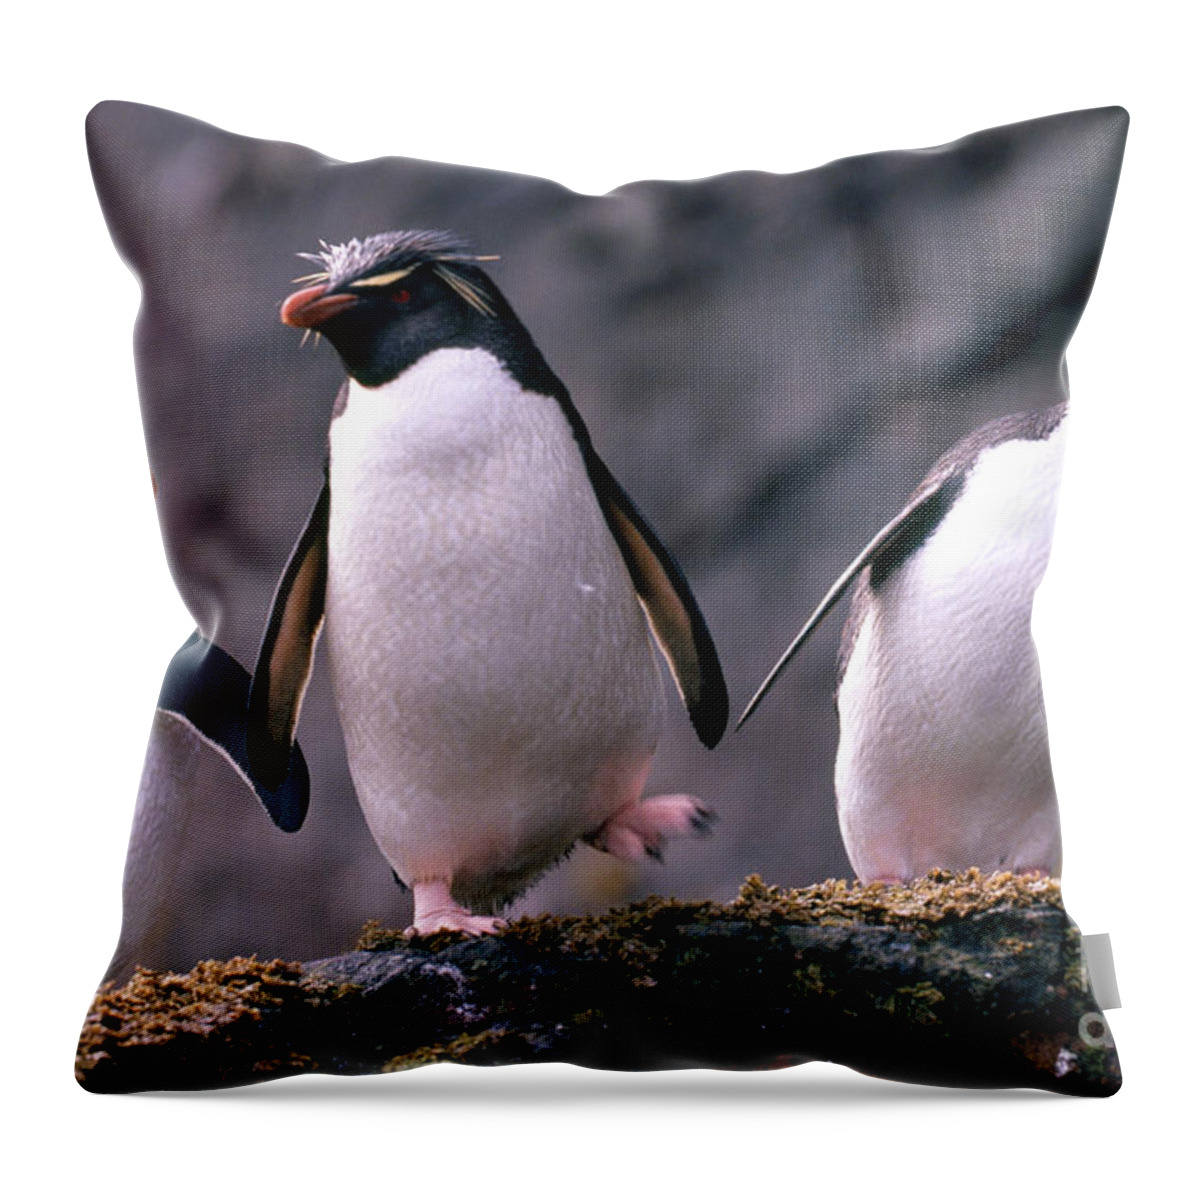 Fauna Throw Pillow featuring the photograph Rockhopper Penguins by Art Wolfe